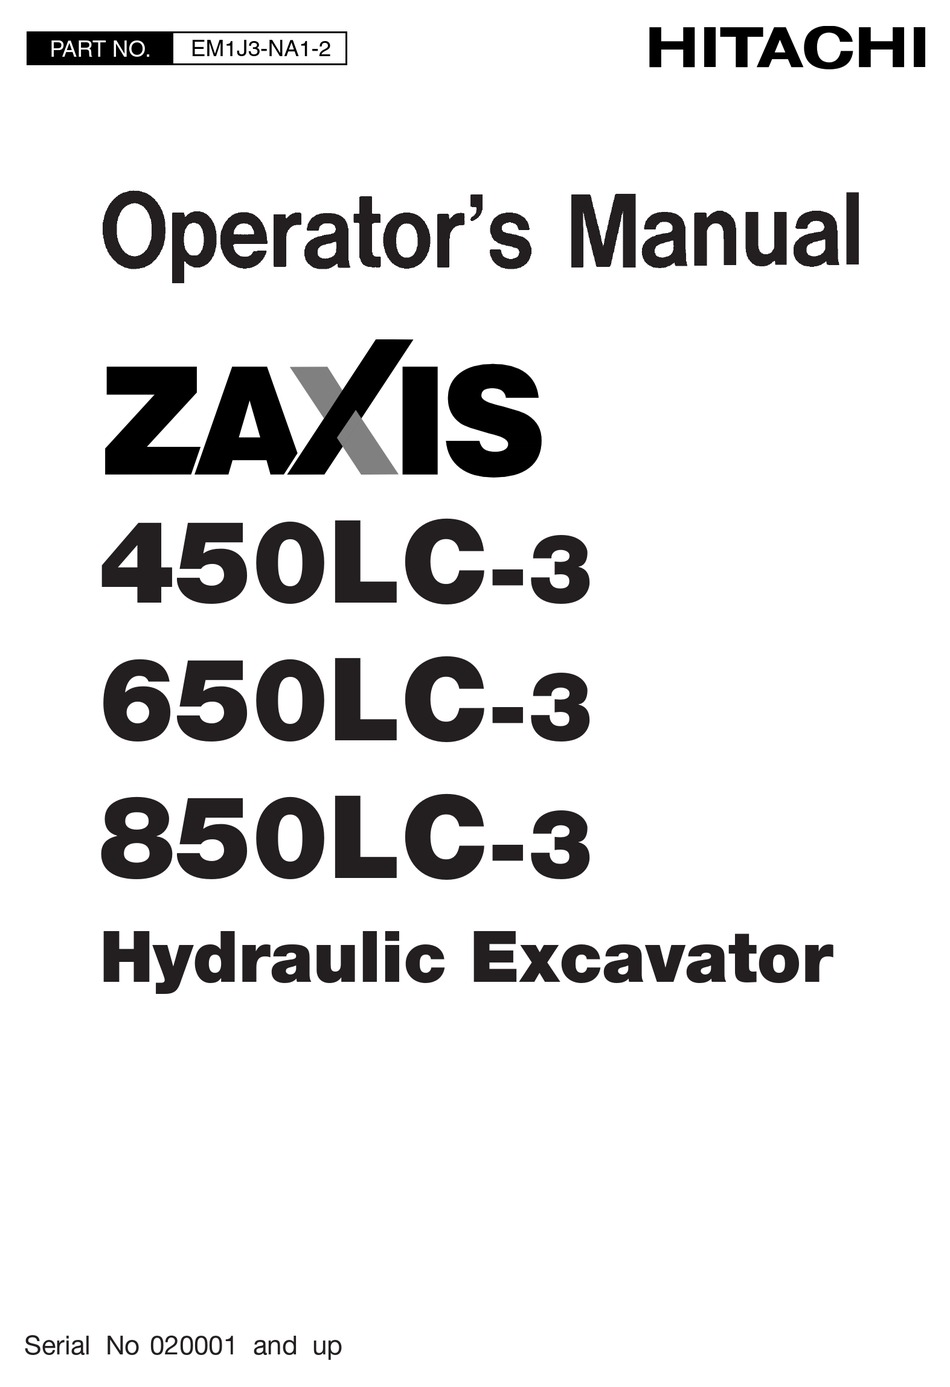 HITACHI ZAXIS 450LC-3 OPERATOR'S MANUAL Pdf Download | ManualsLib